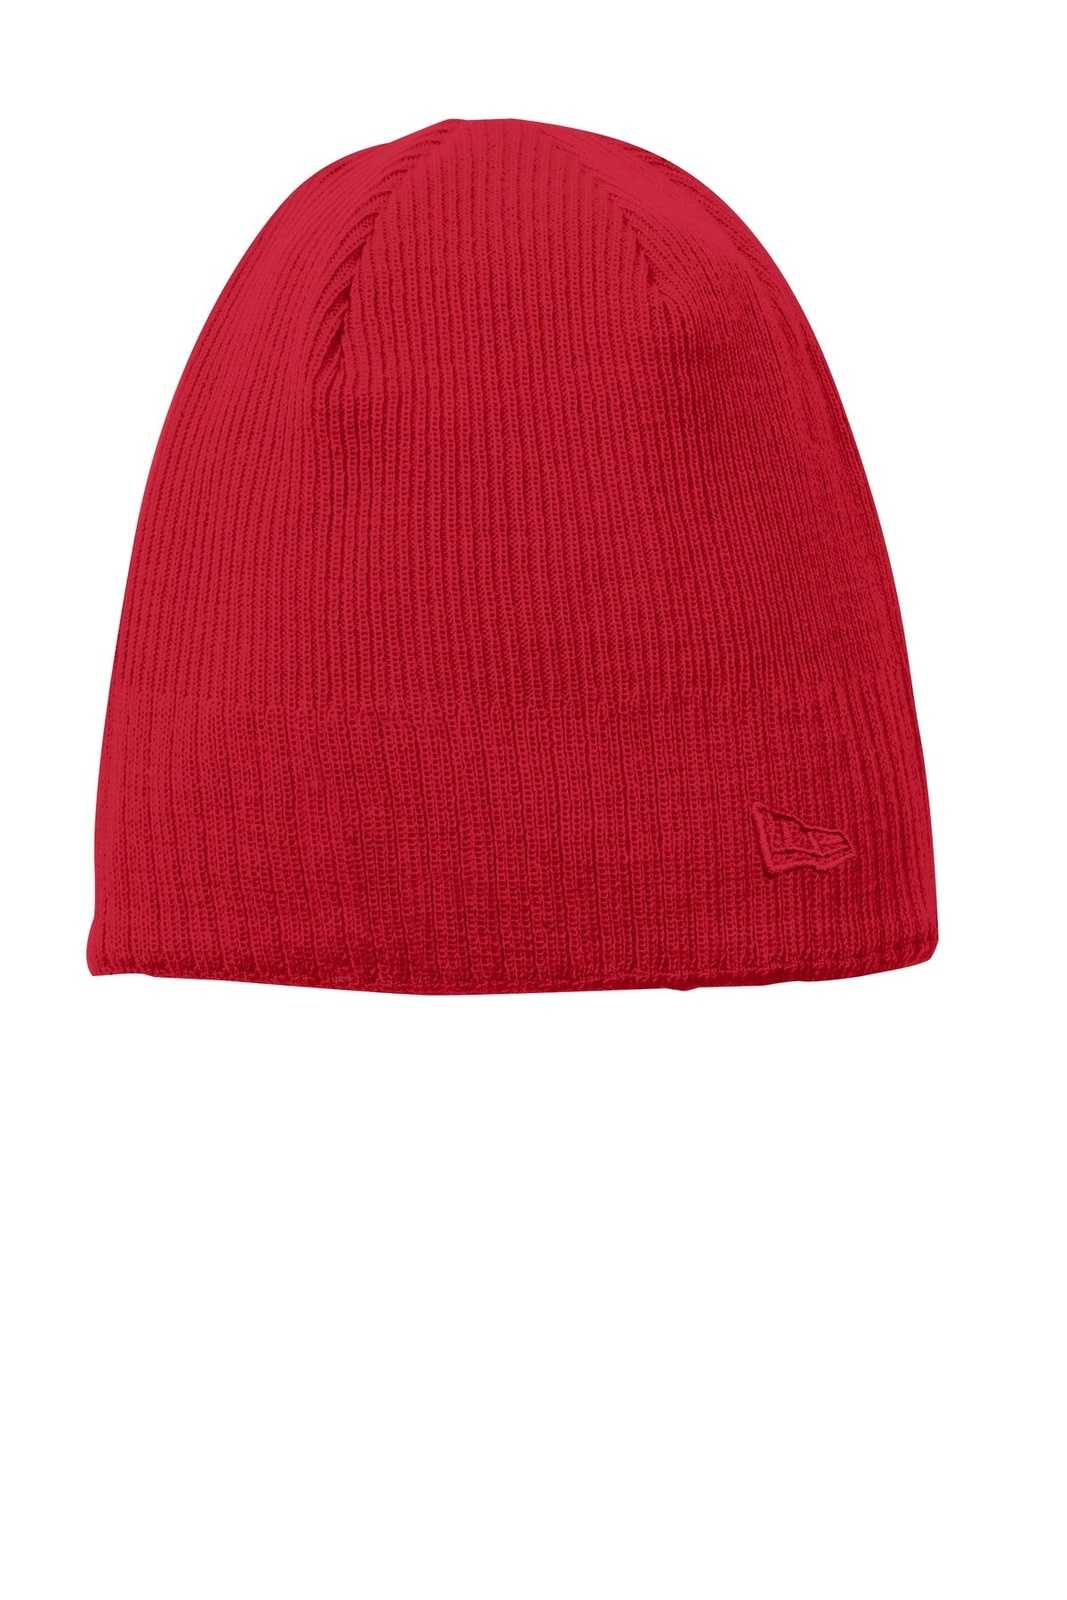 New Era NE900 Knit Beanie - Red - HIT a Double